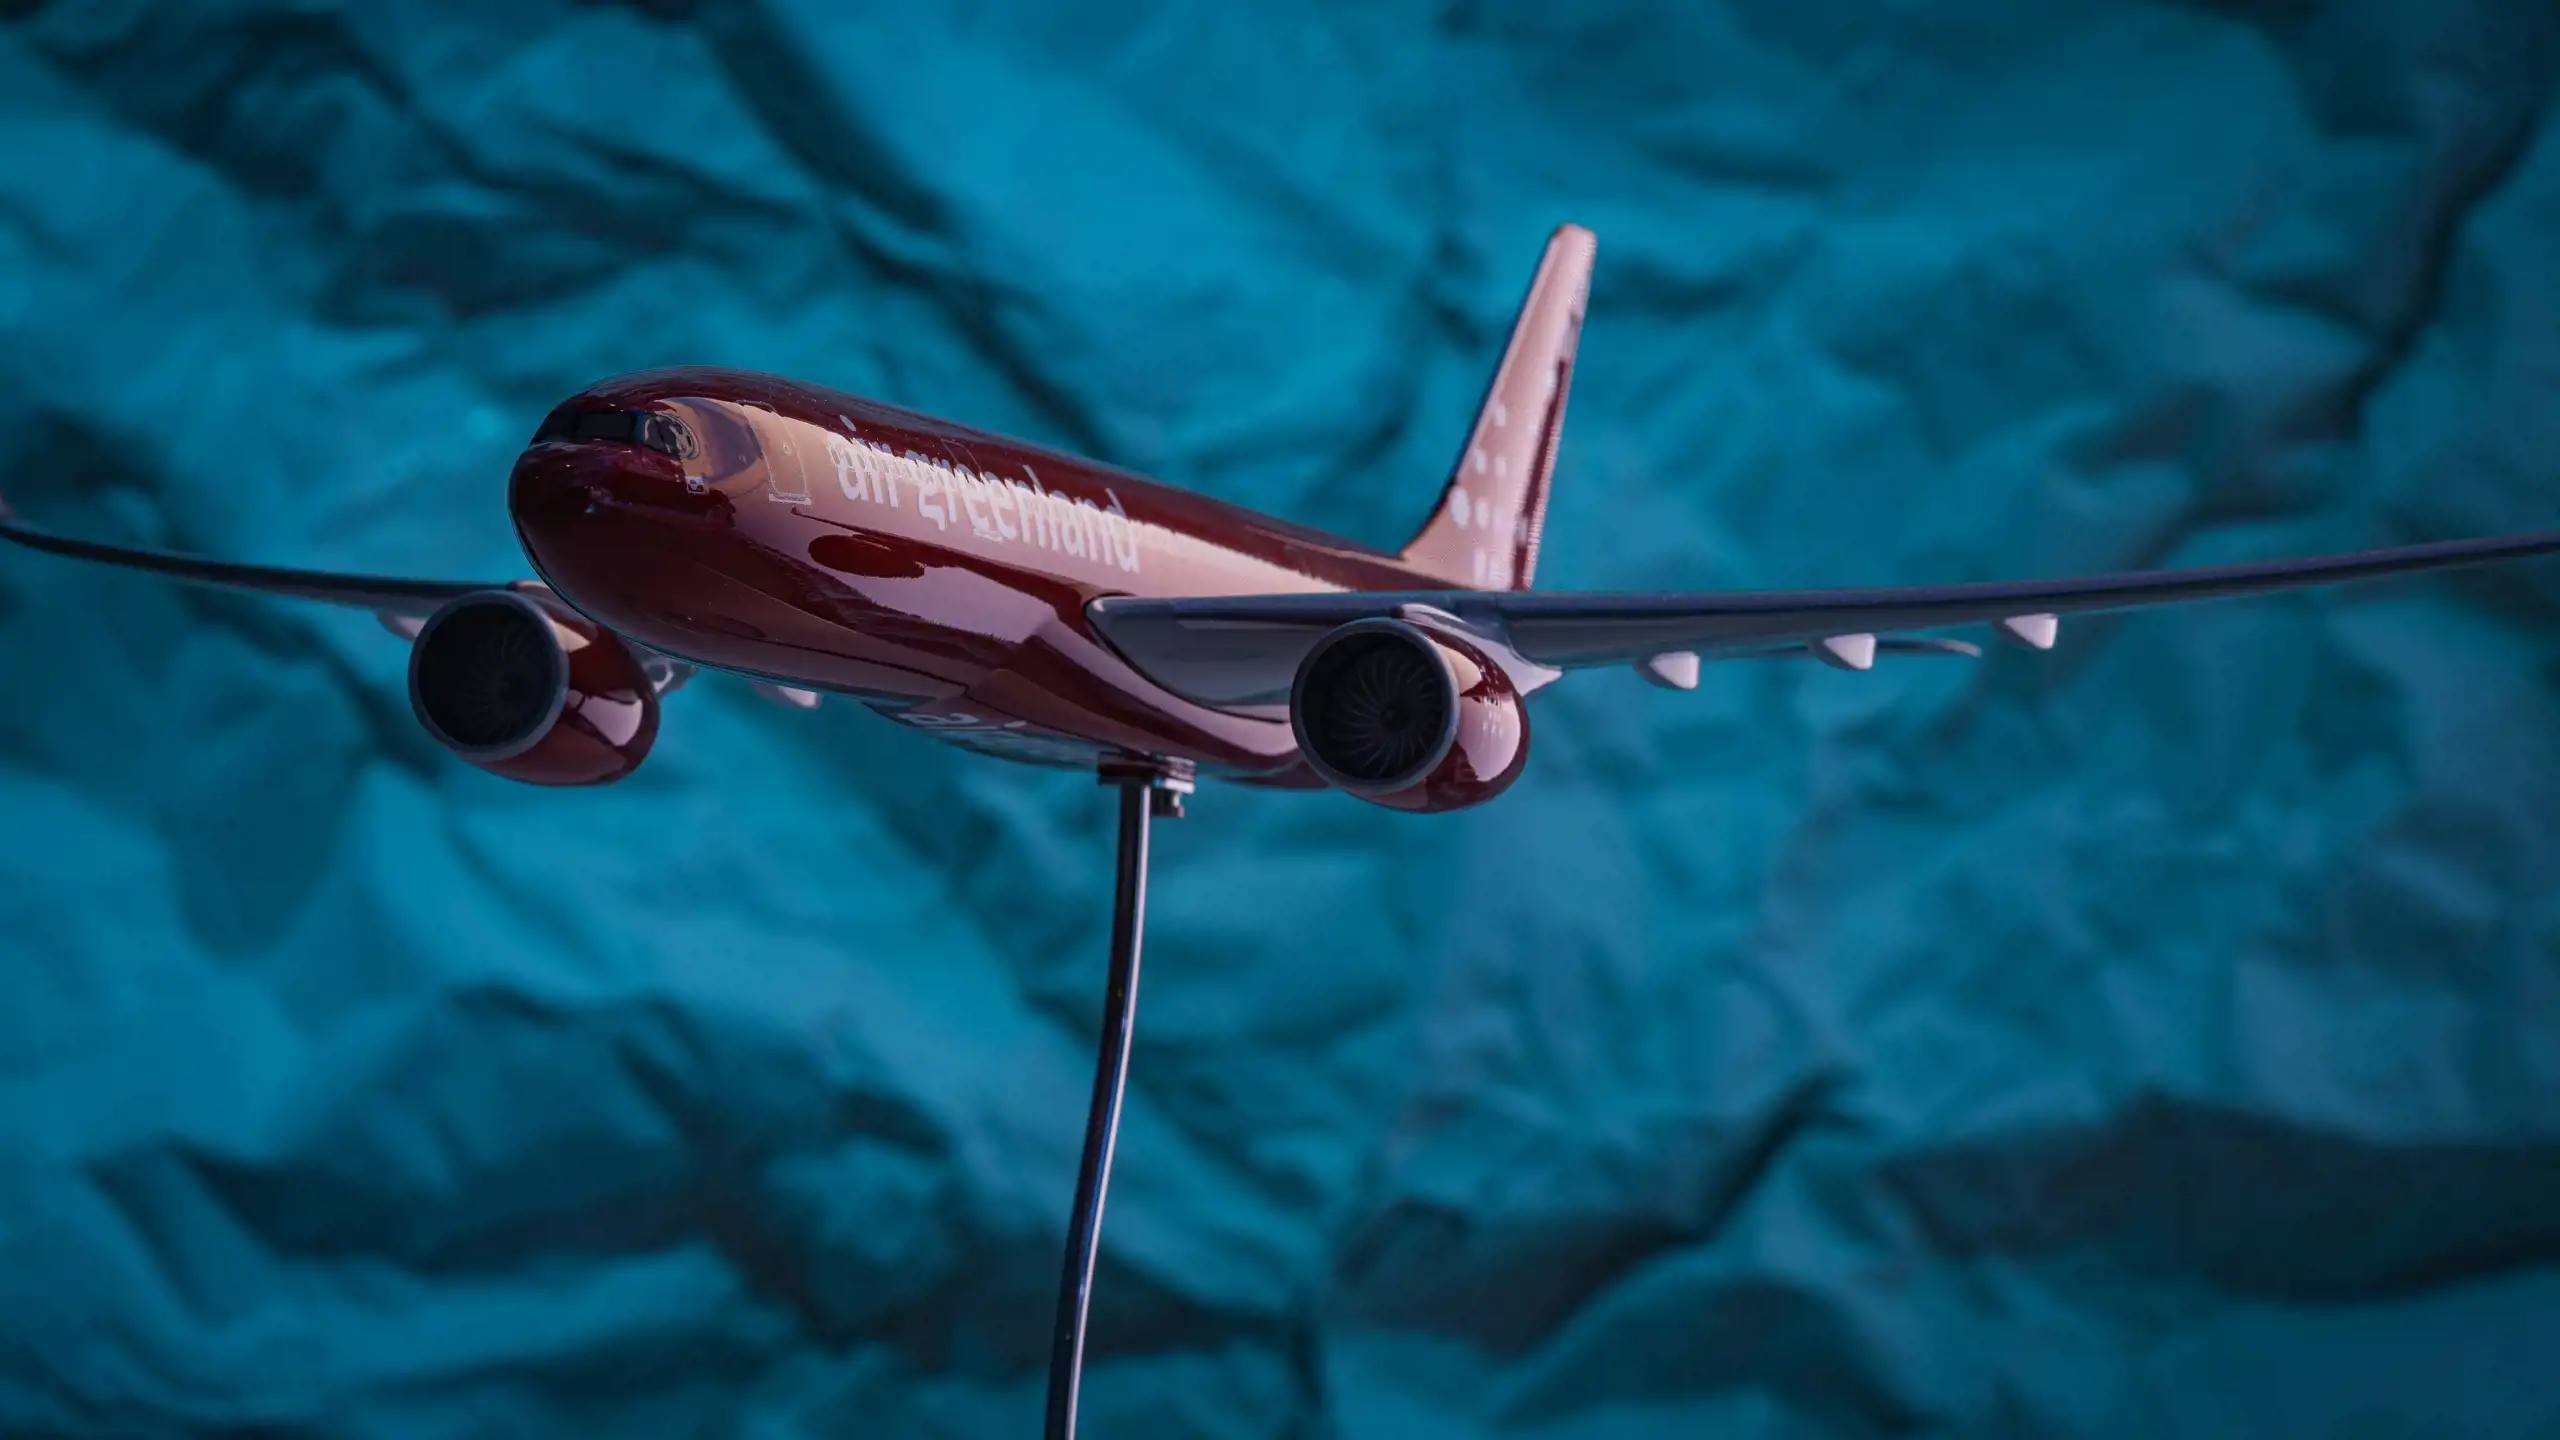 Air Greenlandimiit Airbus-imut tunissut aappaa